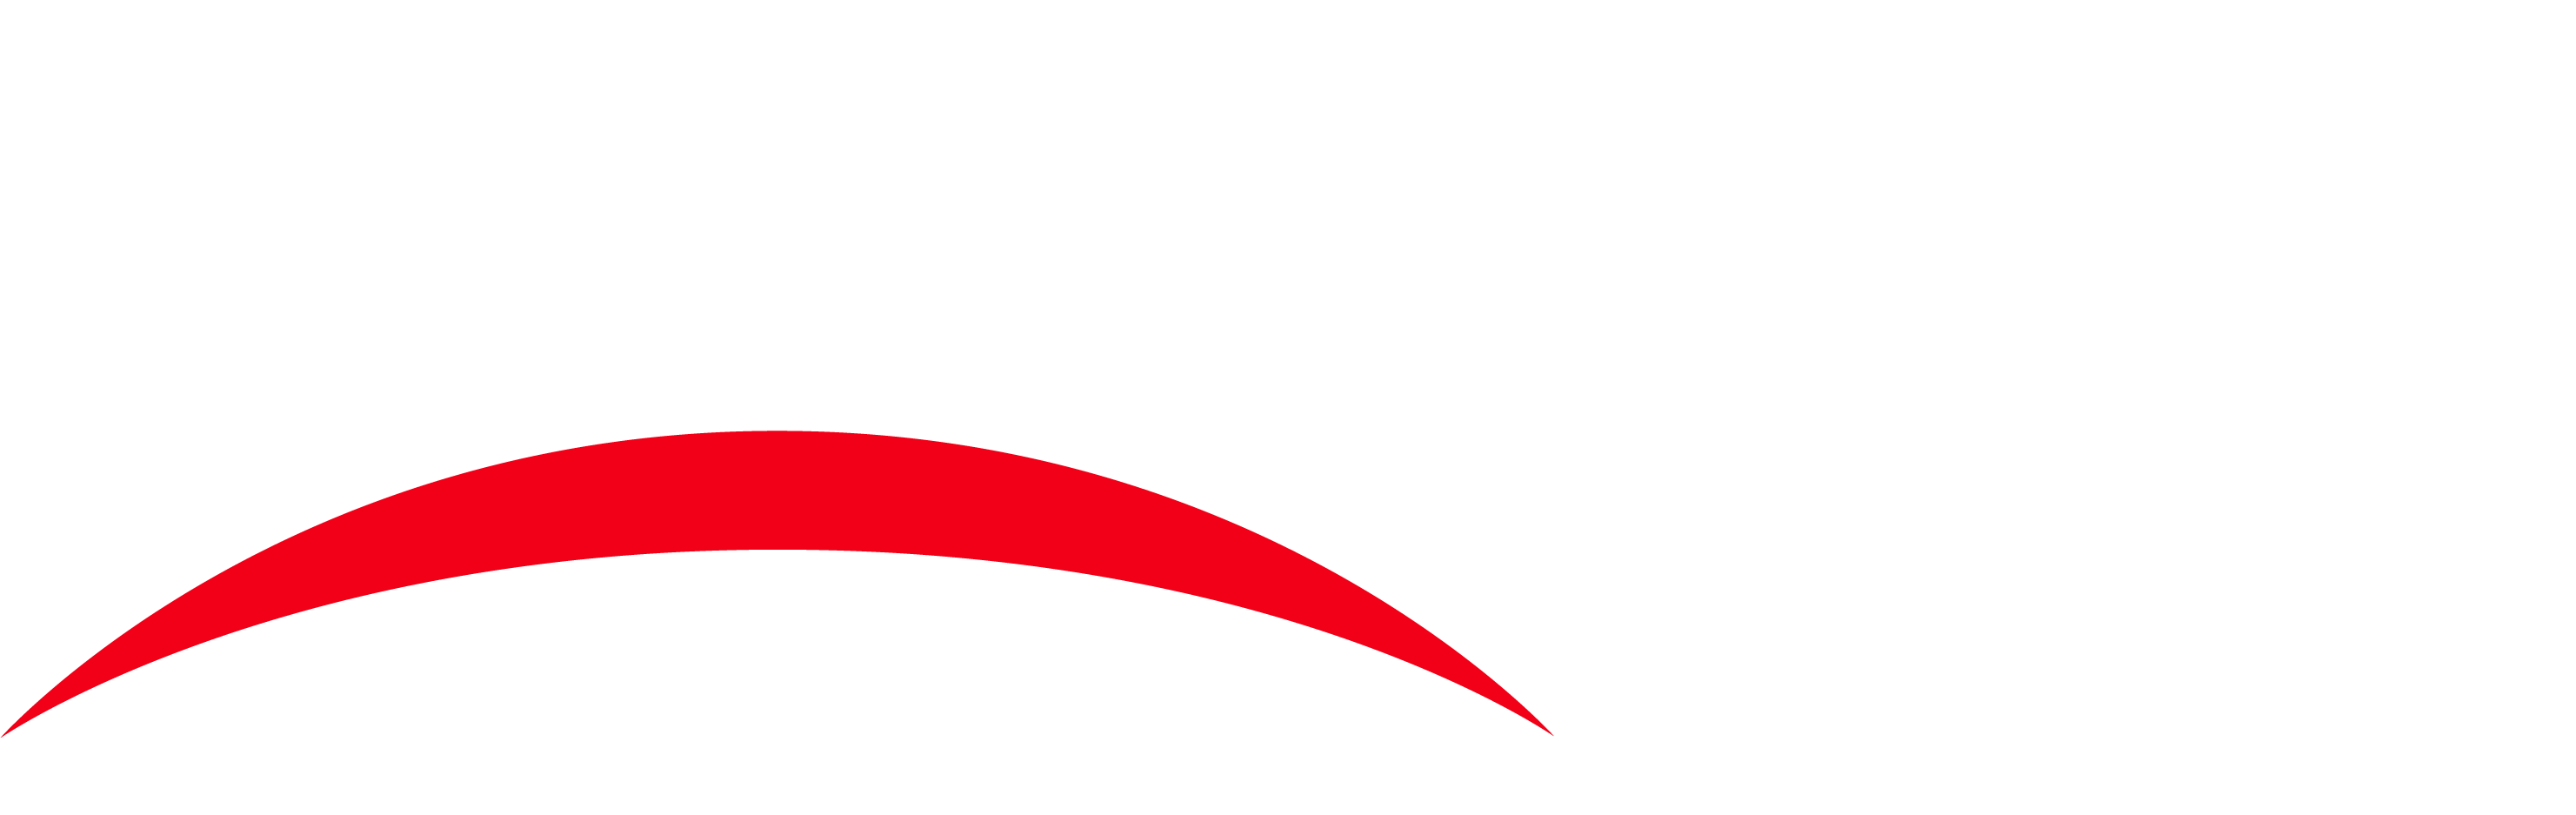 Avatar Financial Group